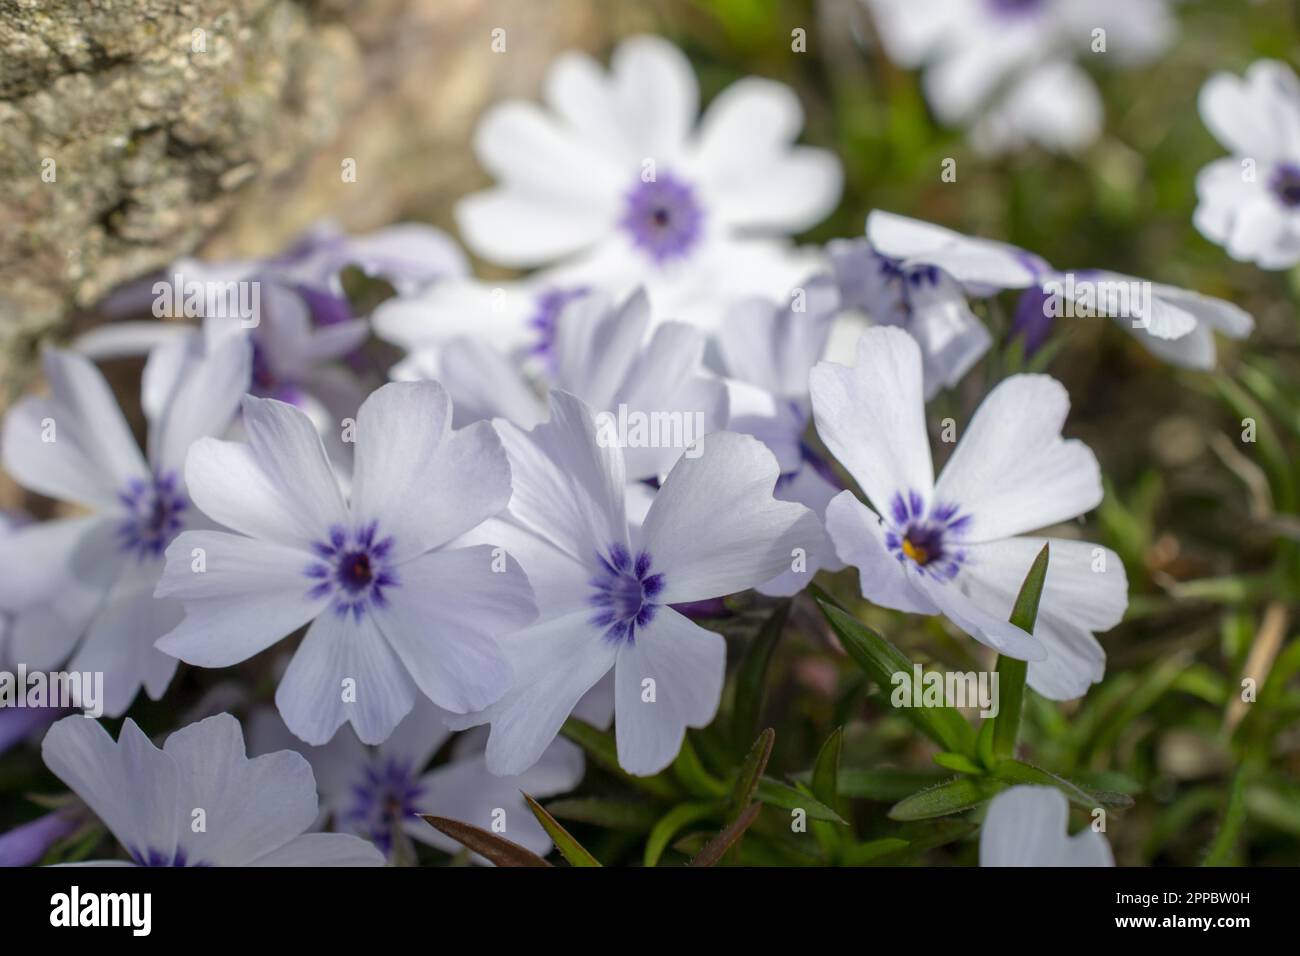 White with a blue eye moss phlox Bavaria. High quality photo Stock Photo